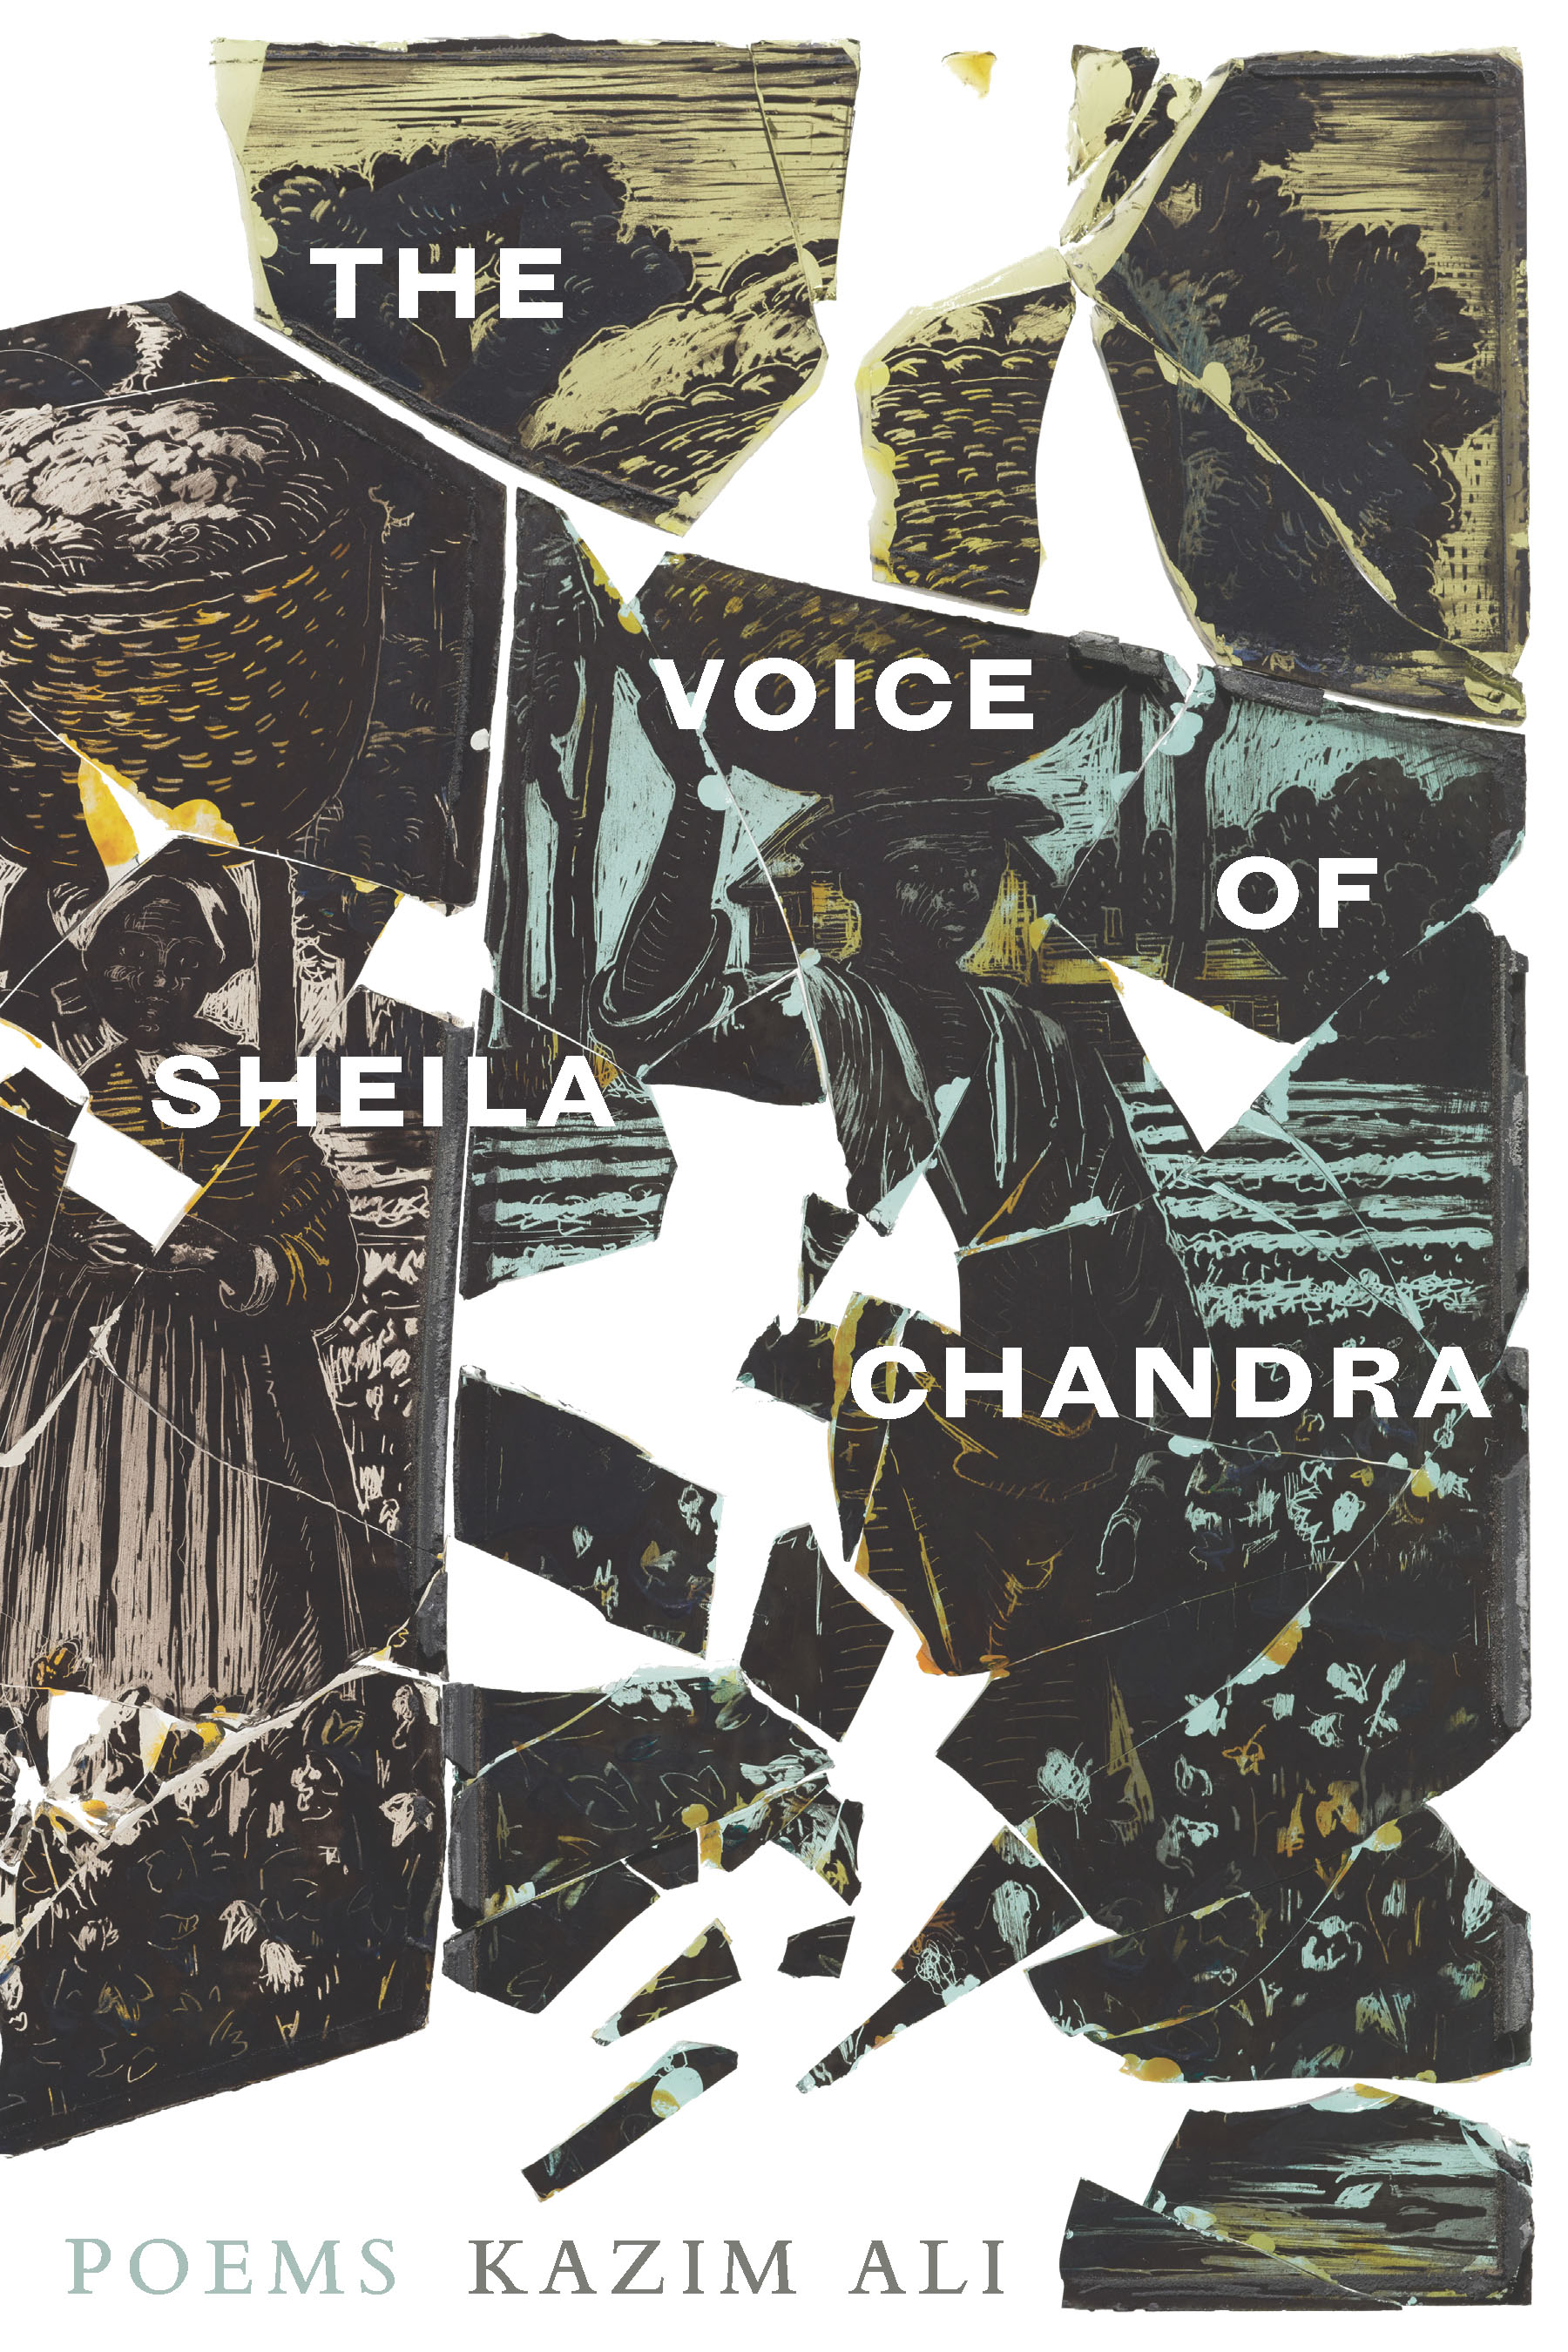 Kazim Ali, The Voice of Sheila Chandra